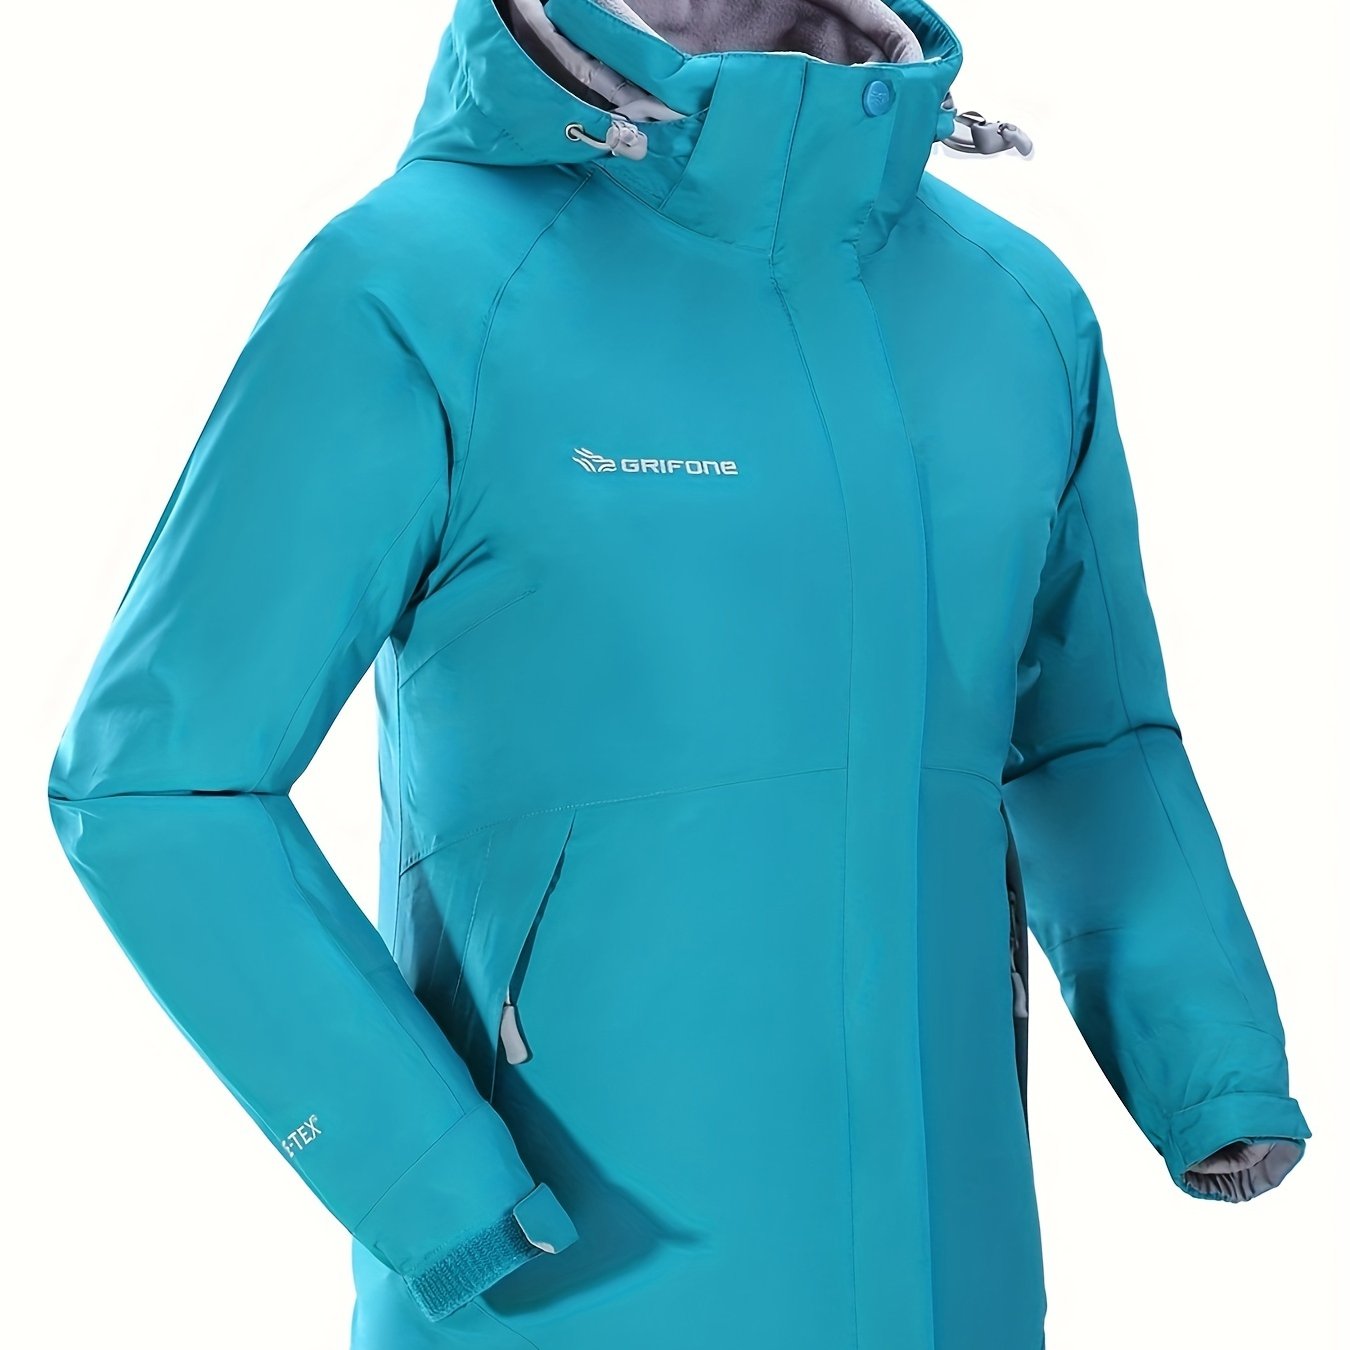 Stylish Ski Jackets for Women - Blanqo